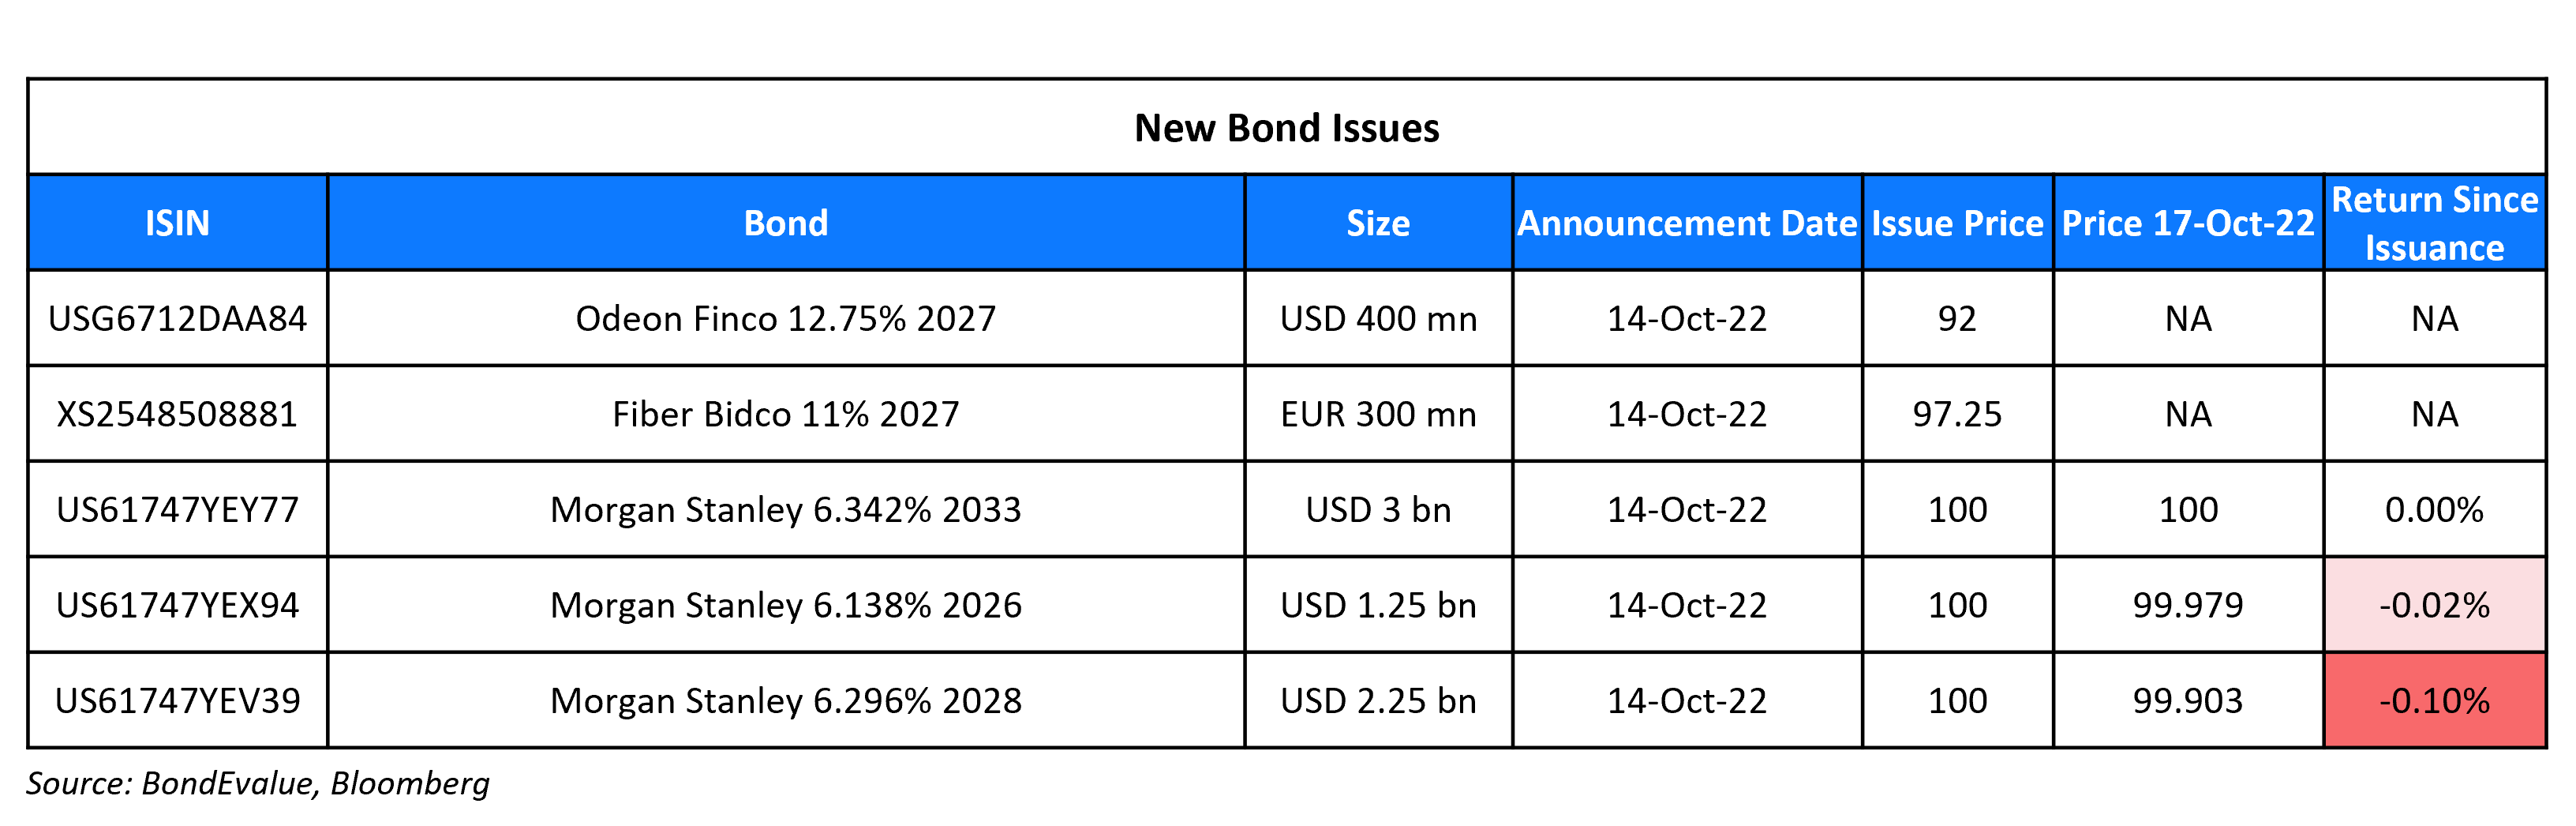 New Bond Issues 17 Oct 22